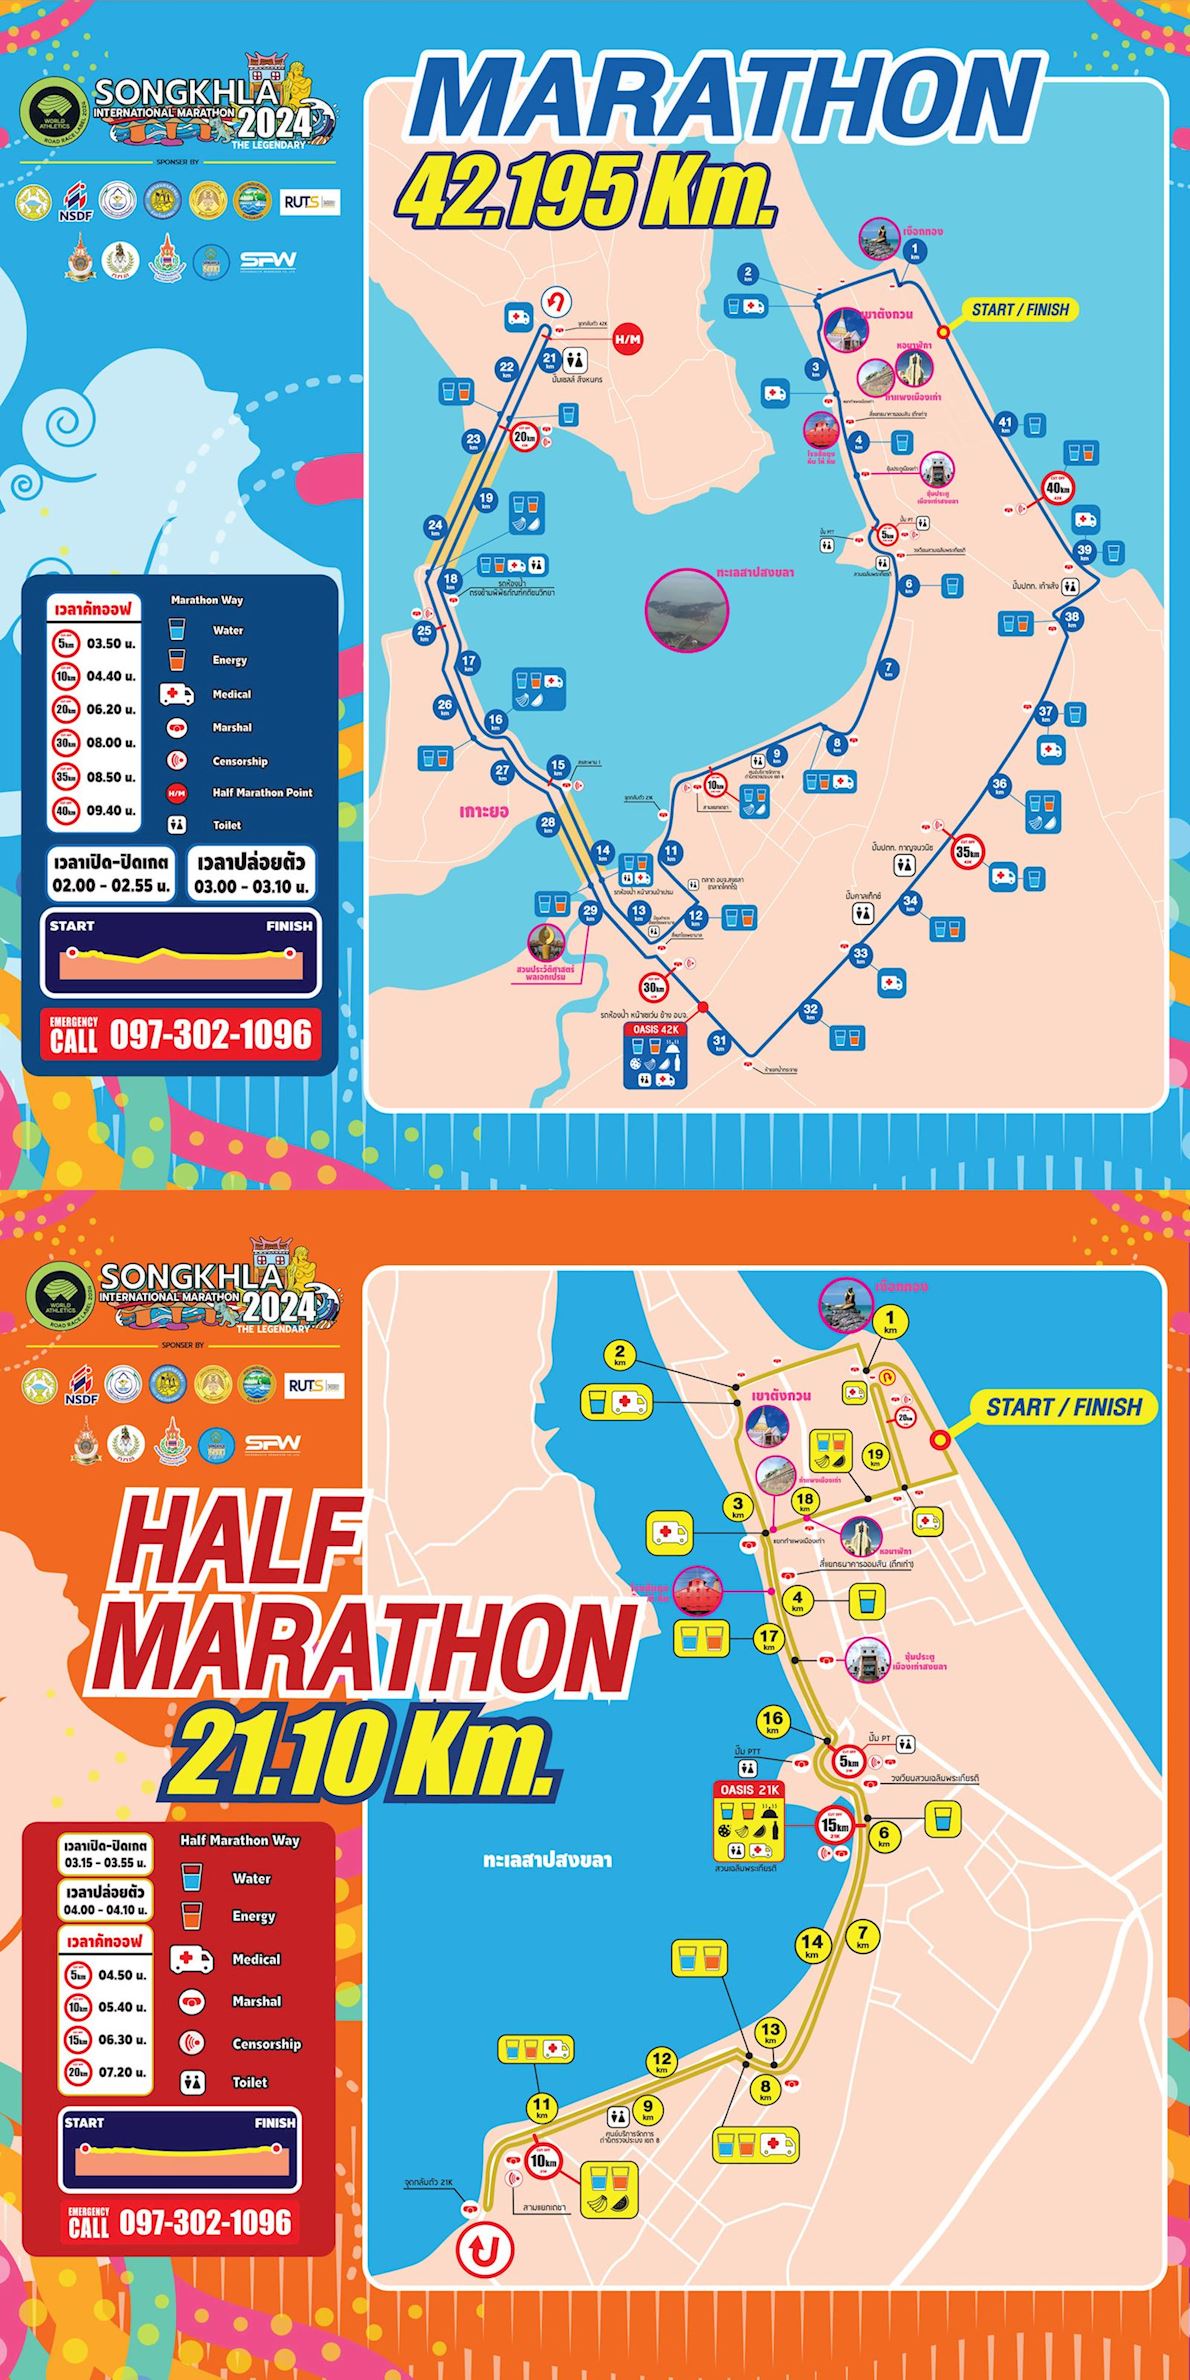 Songkhla International Marathon 路线图